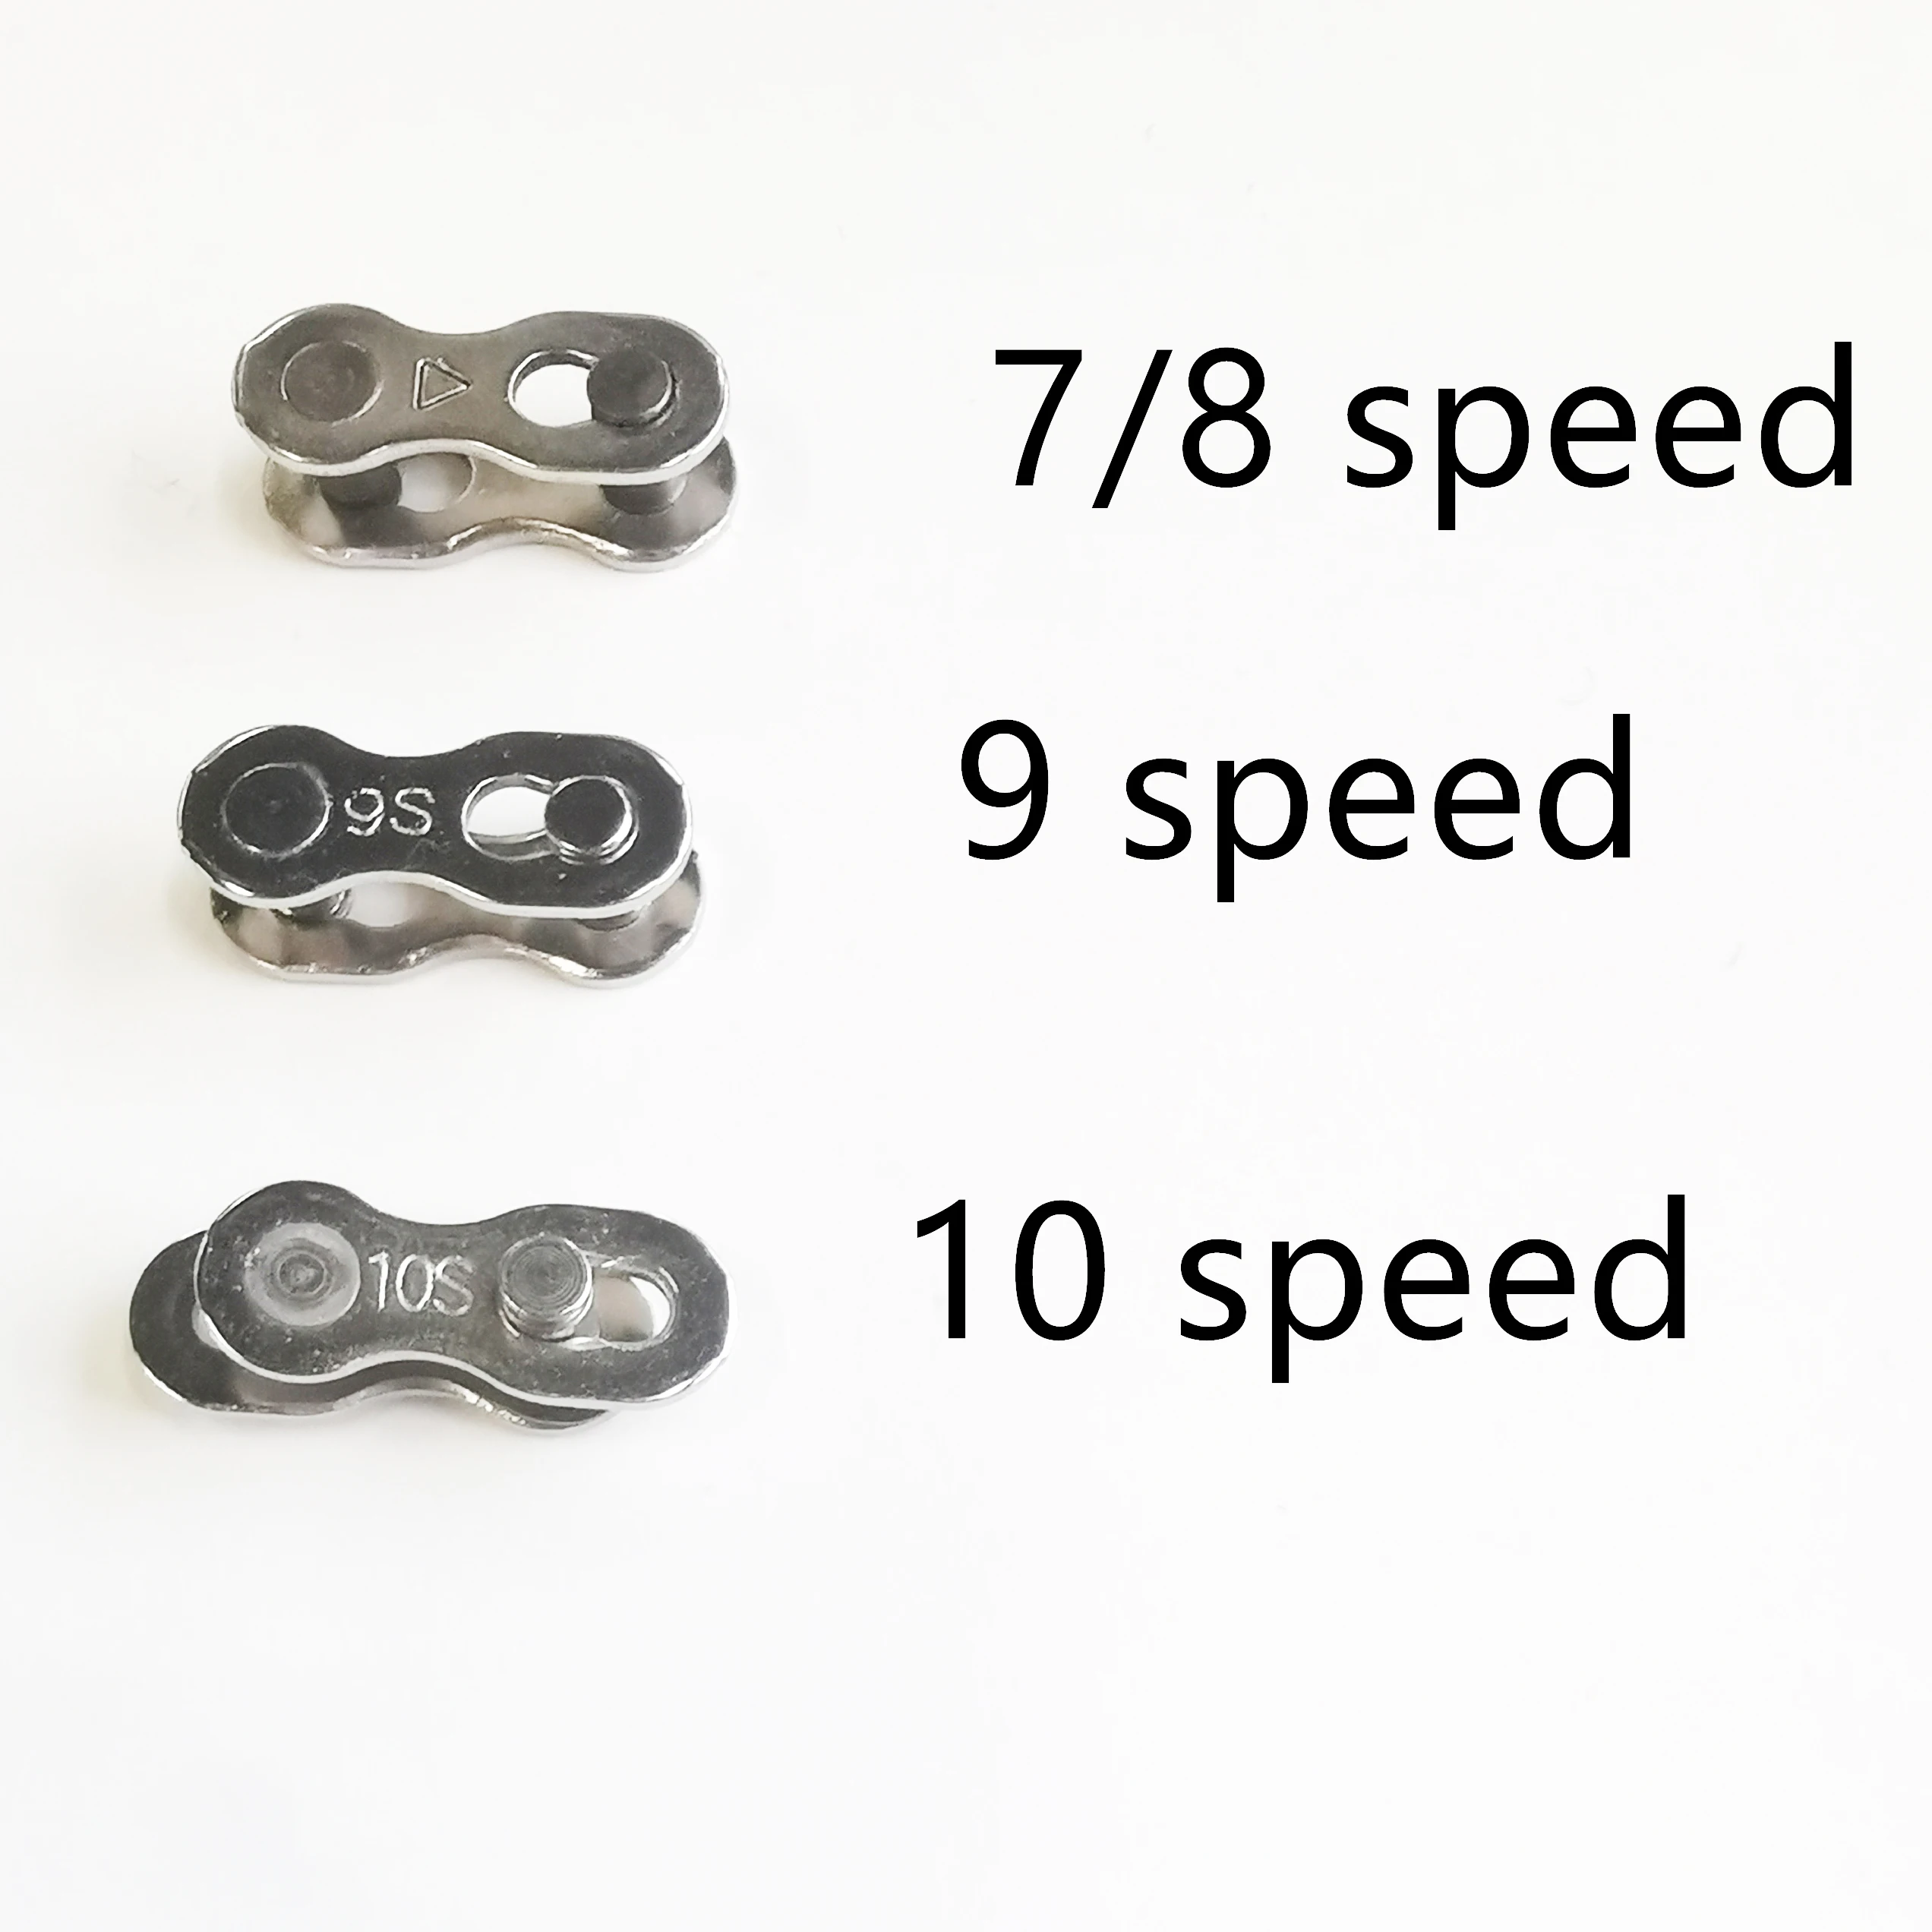 9 speed chain on 8 speed